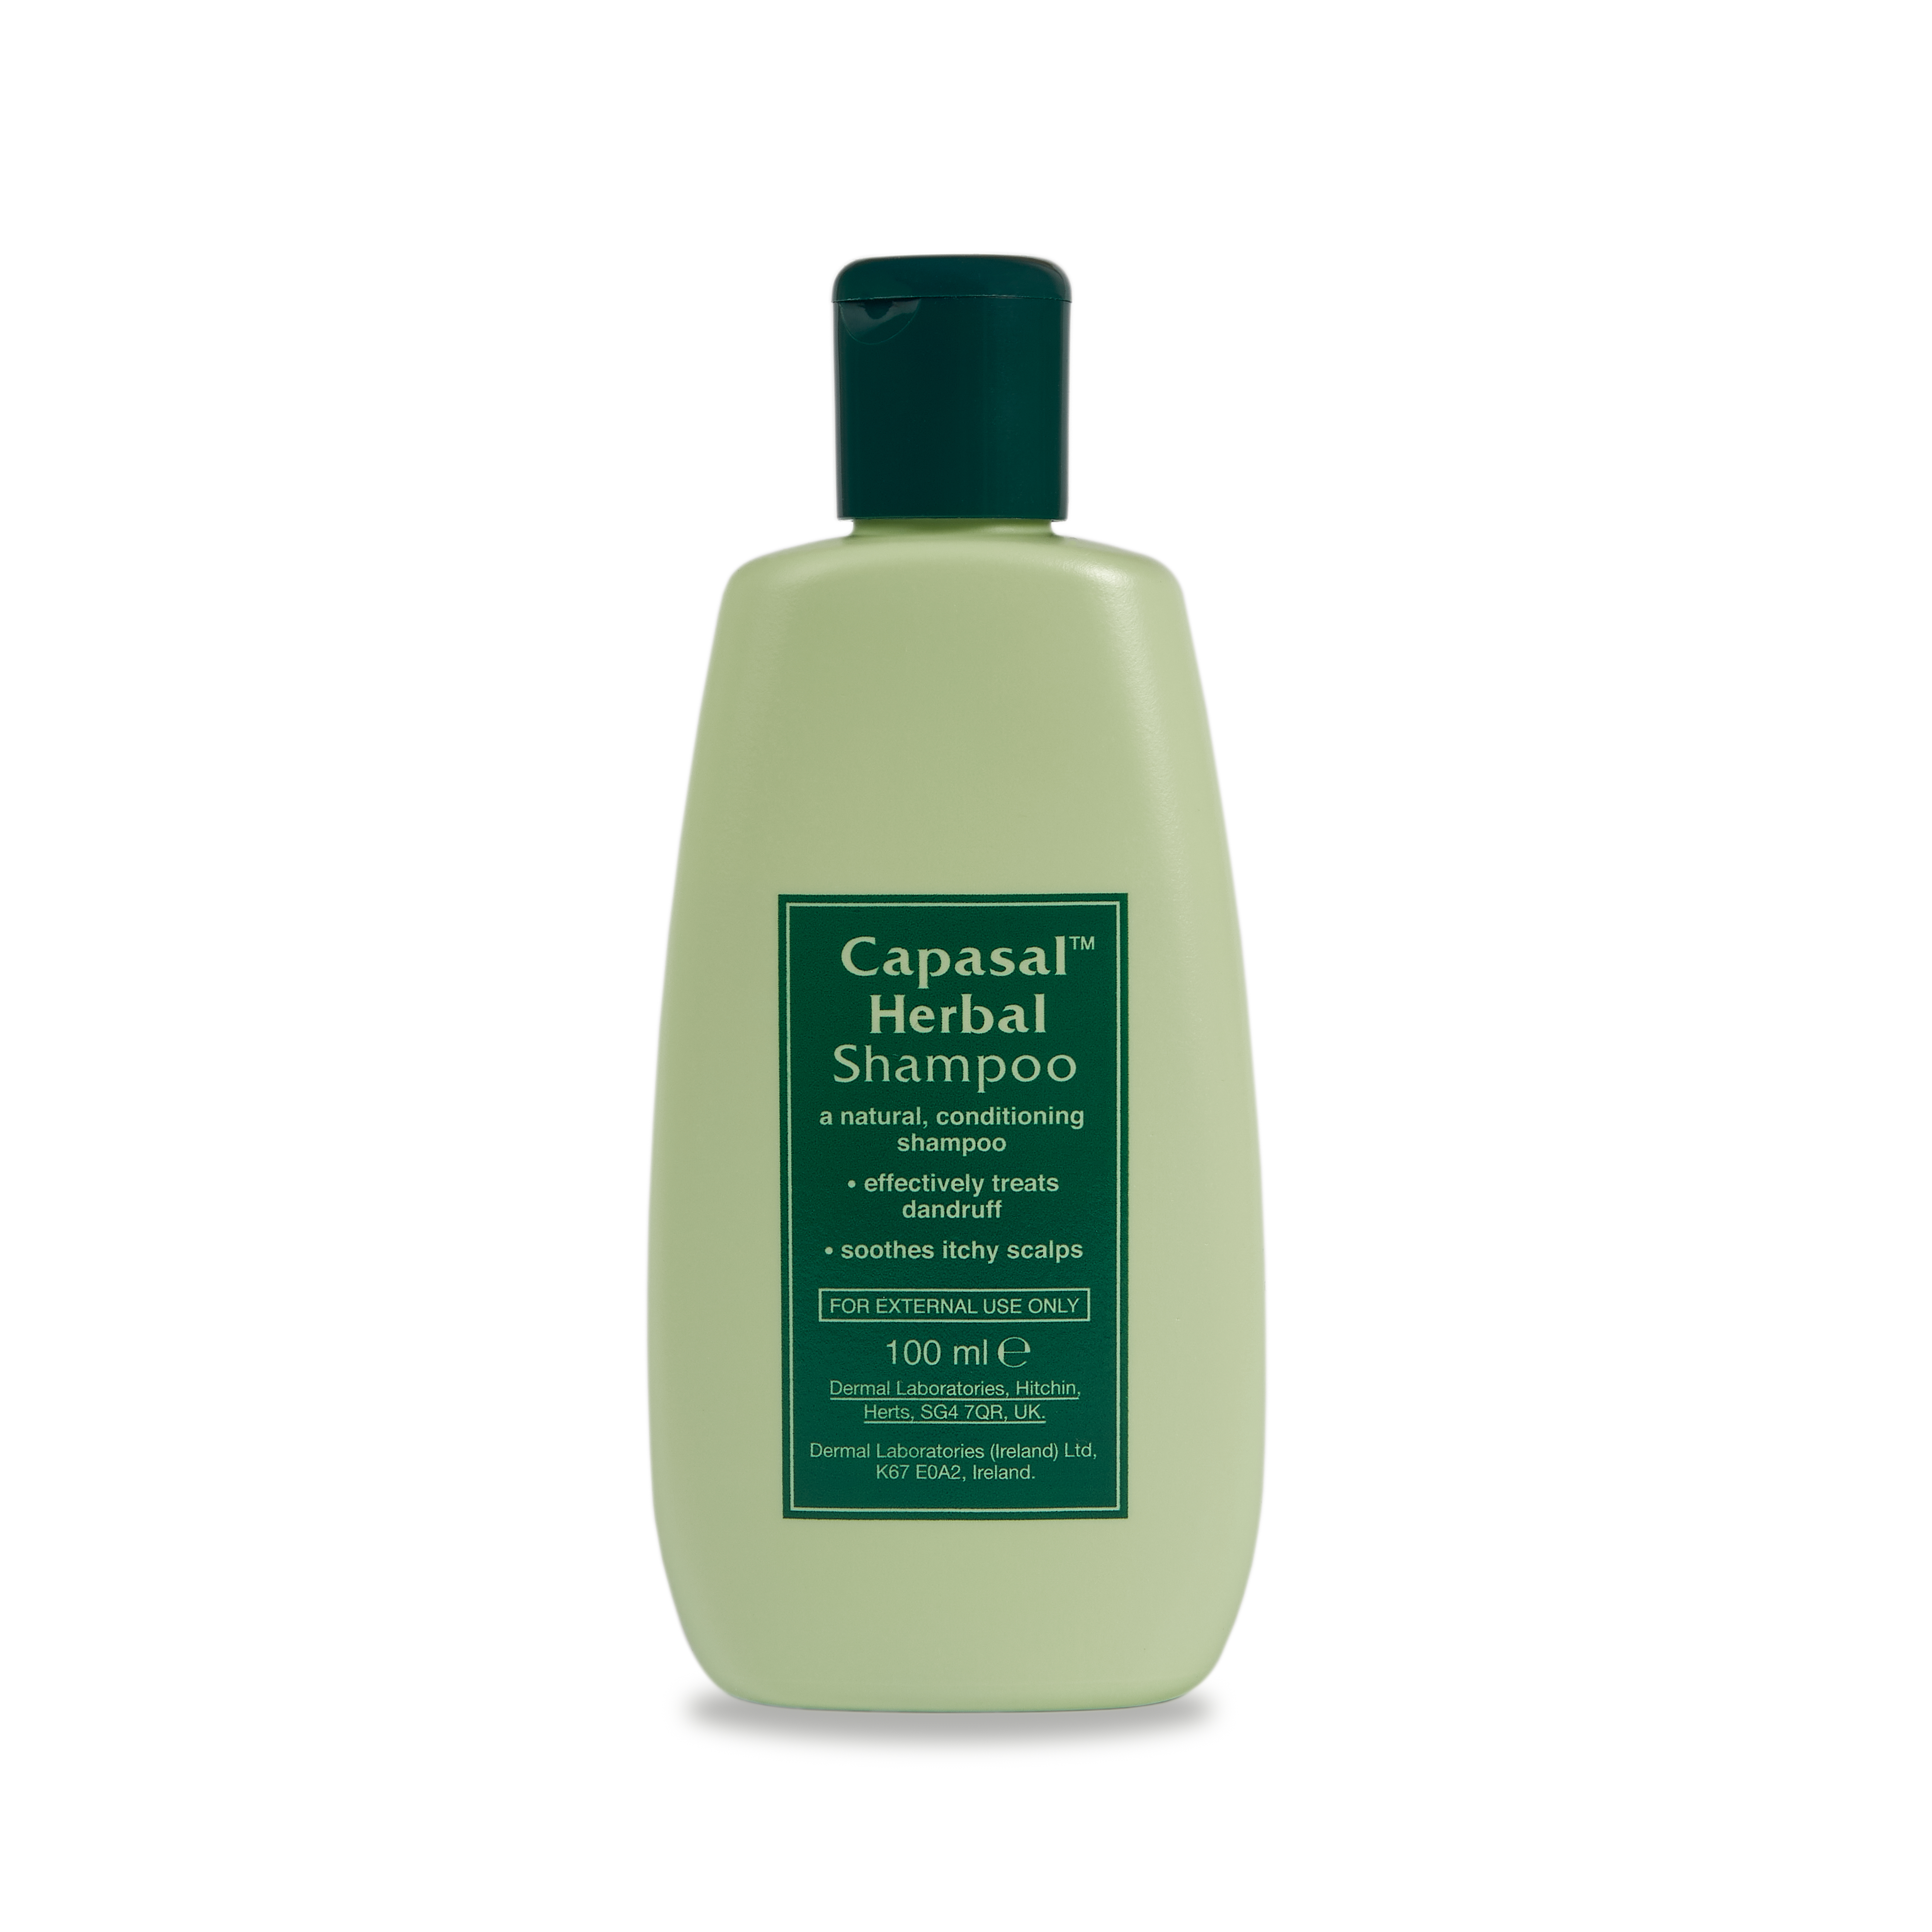 Capasal™ Herbal Shampoo